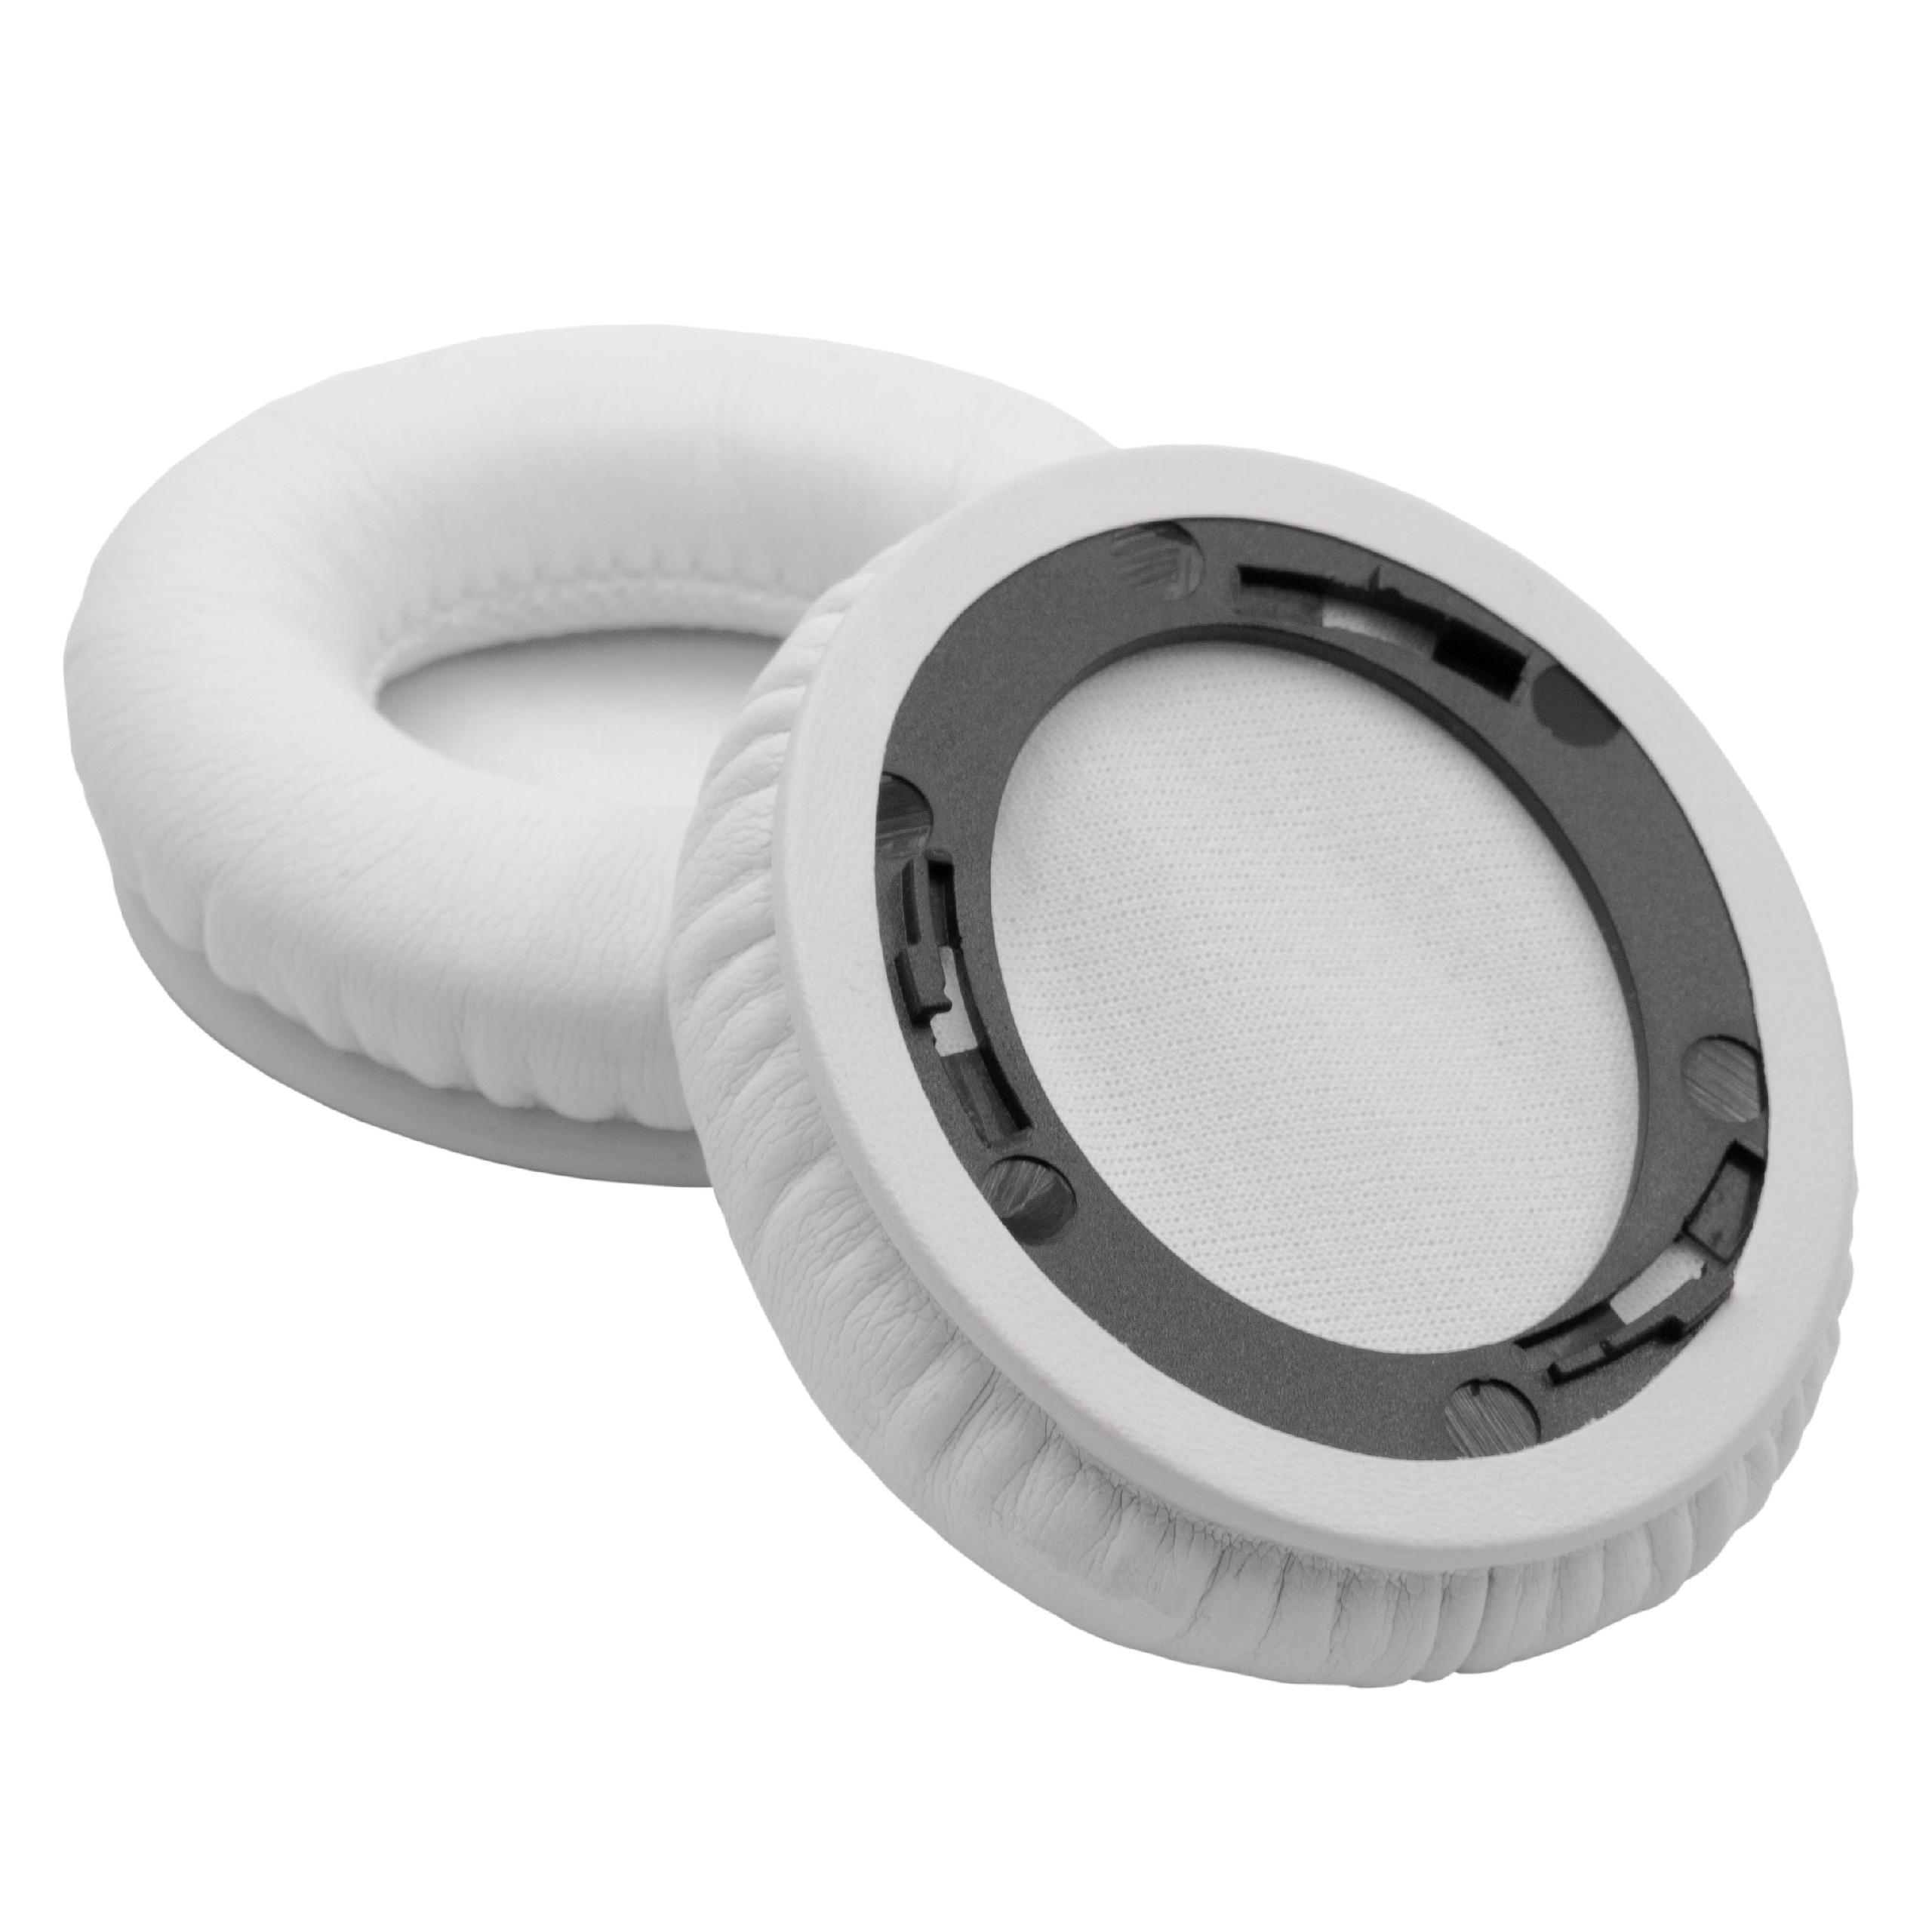 Ear Pads suitable for Beats by Dr. Dre Solo HD 1 Headphones etc. - polyurethane / foam, 14 mm thick